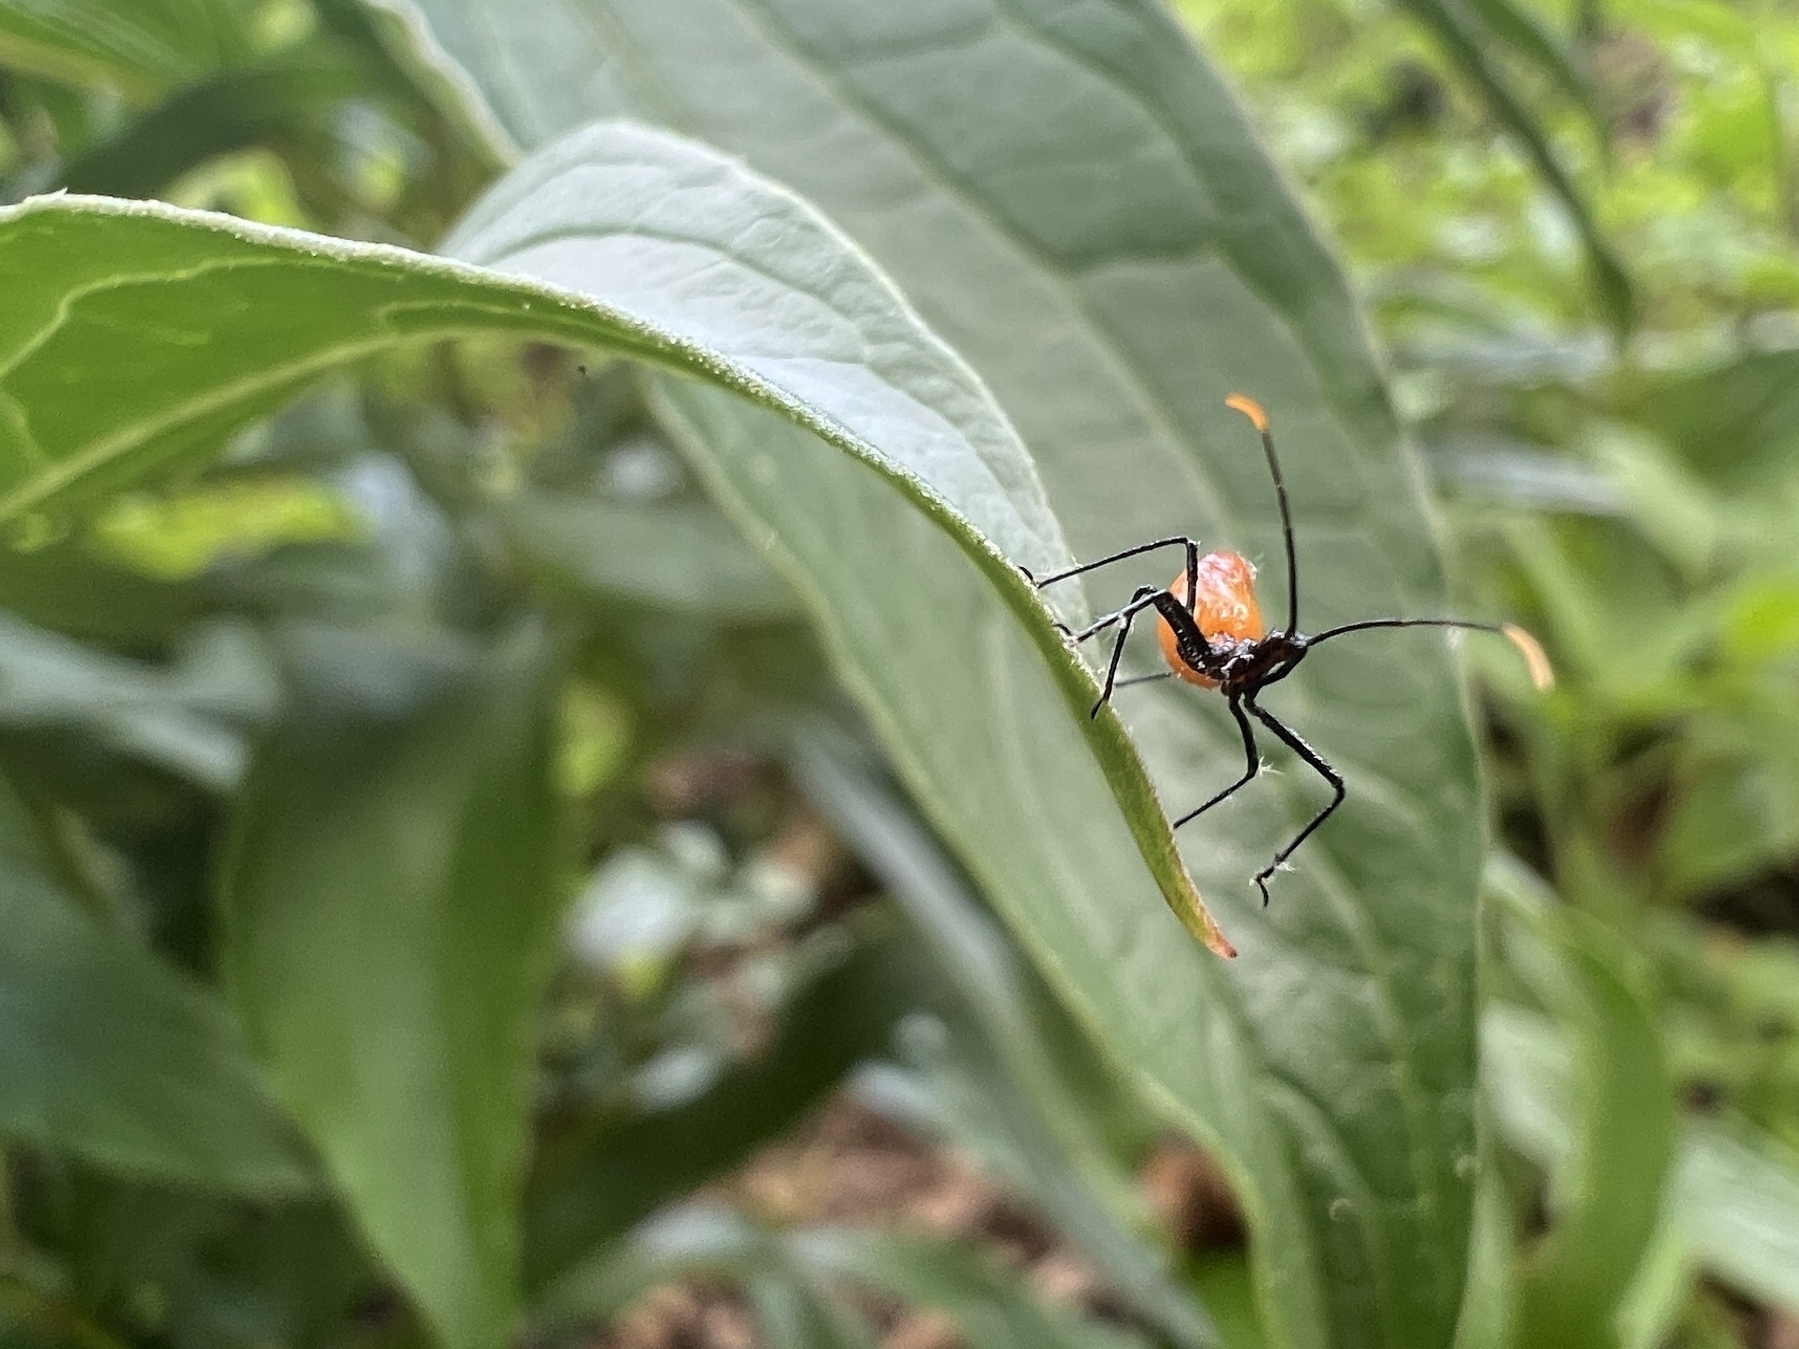 a very tiny assassin bug with an orange abdomen, black legs, and black head